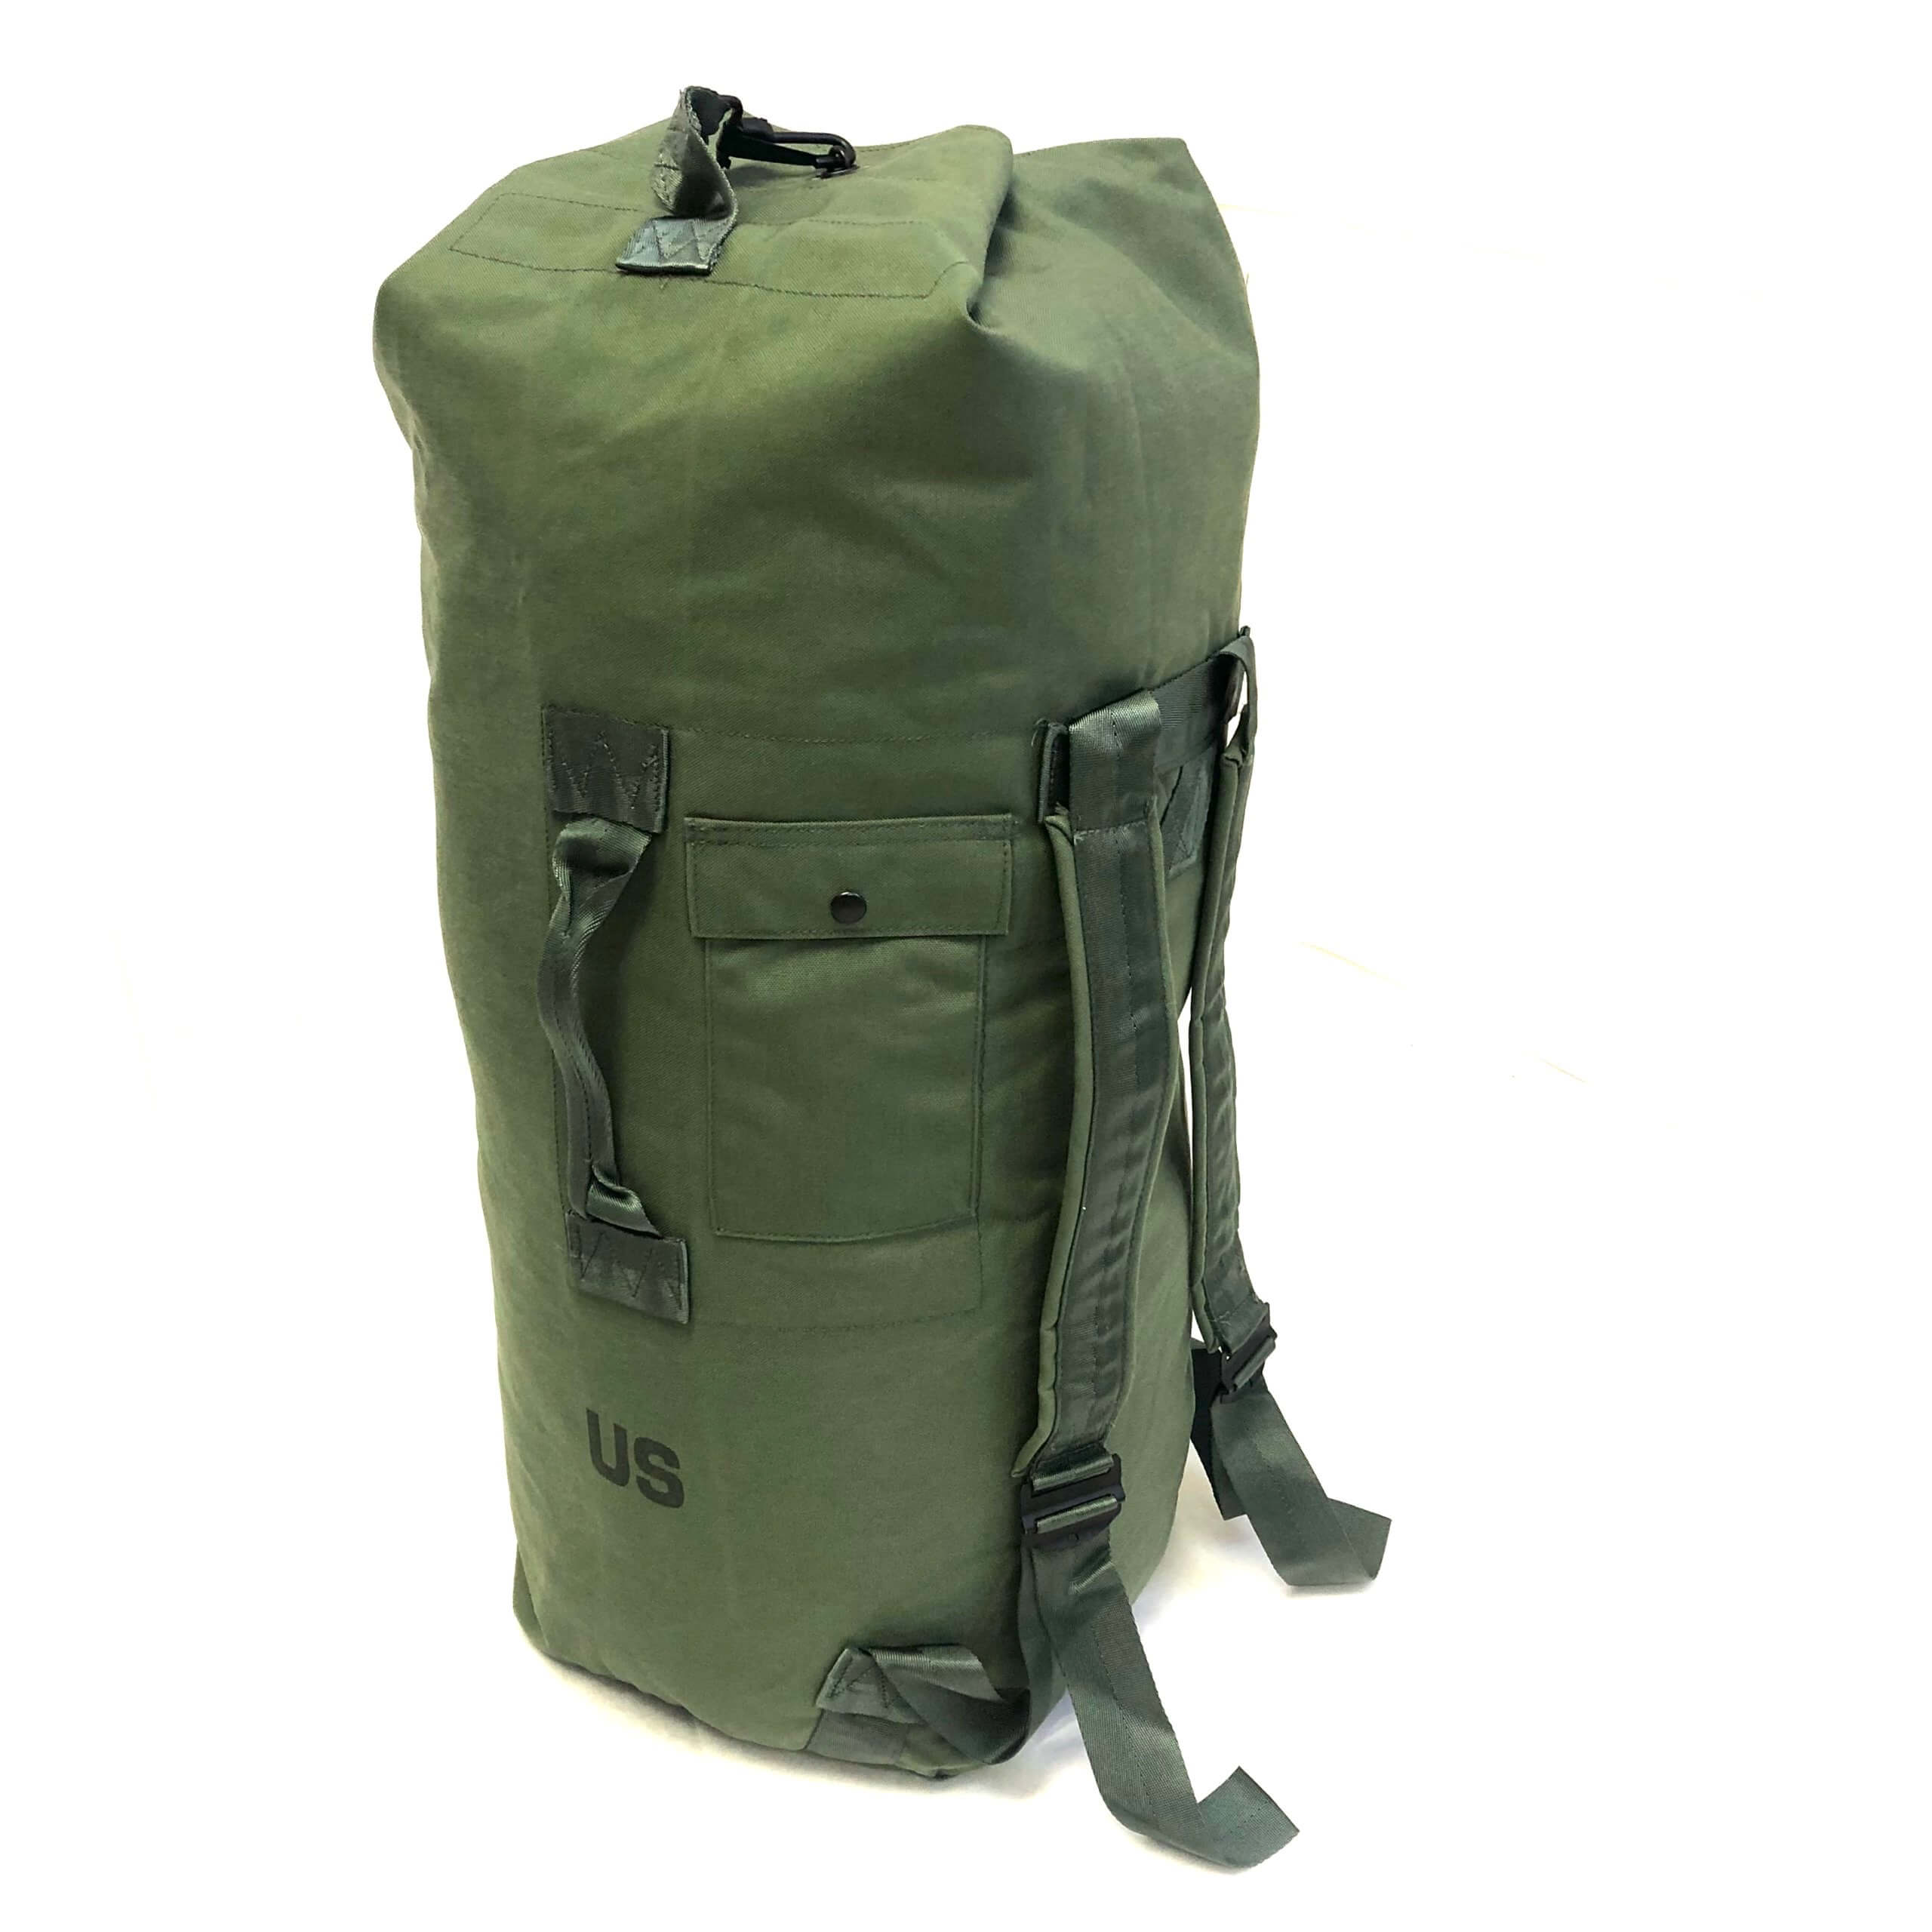 Sea Bag - Nylon Army Duffel Bag - Venture Surplus - Genuine Issue